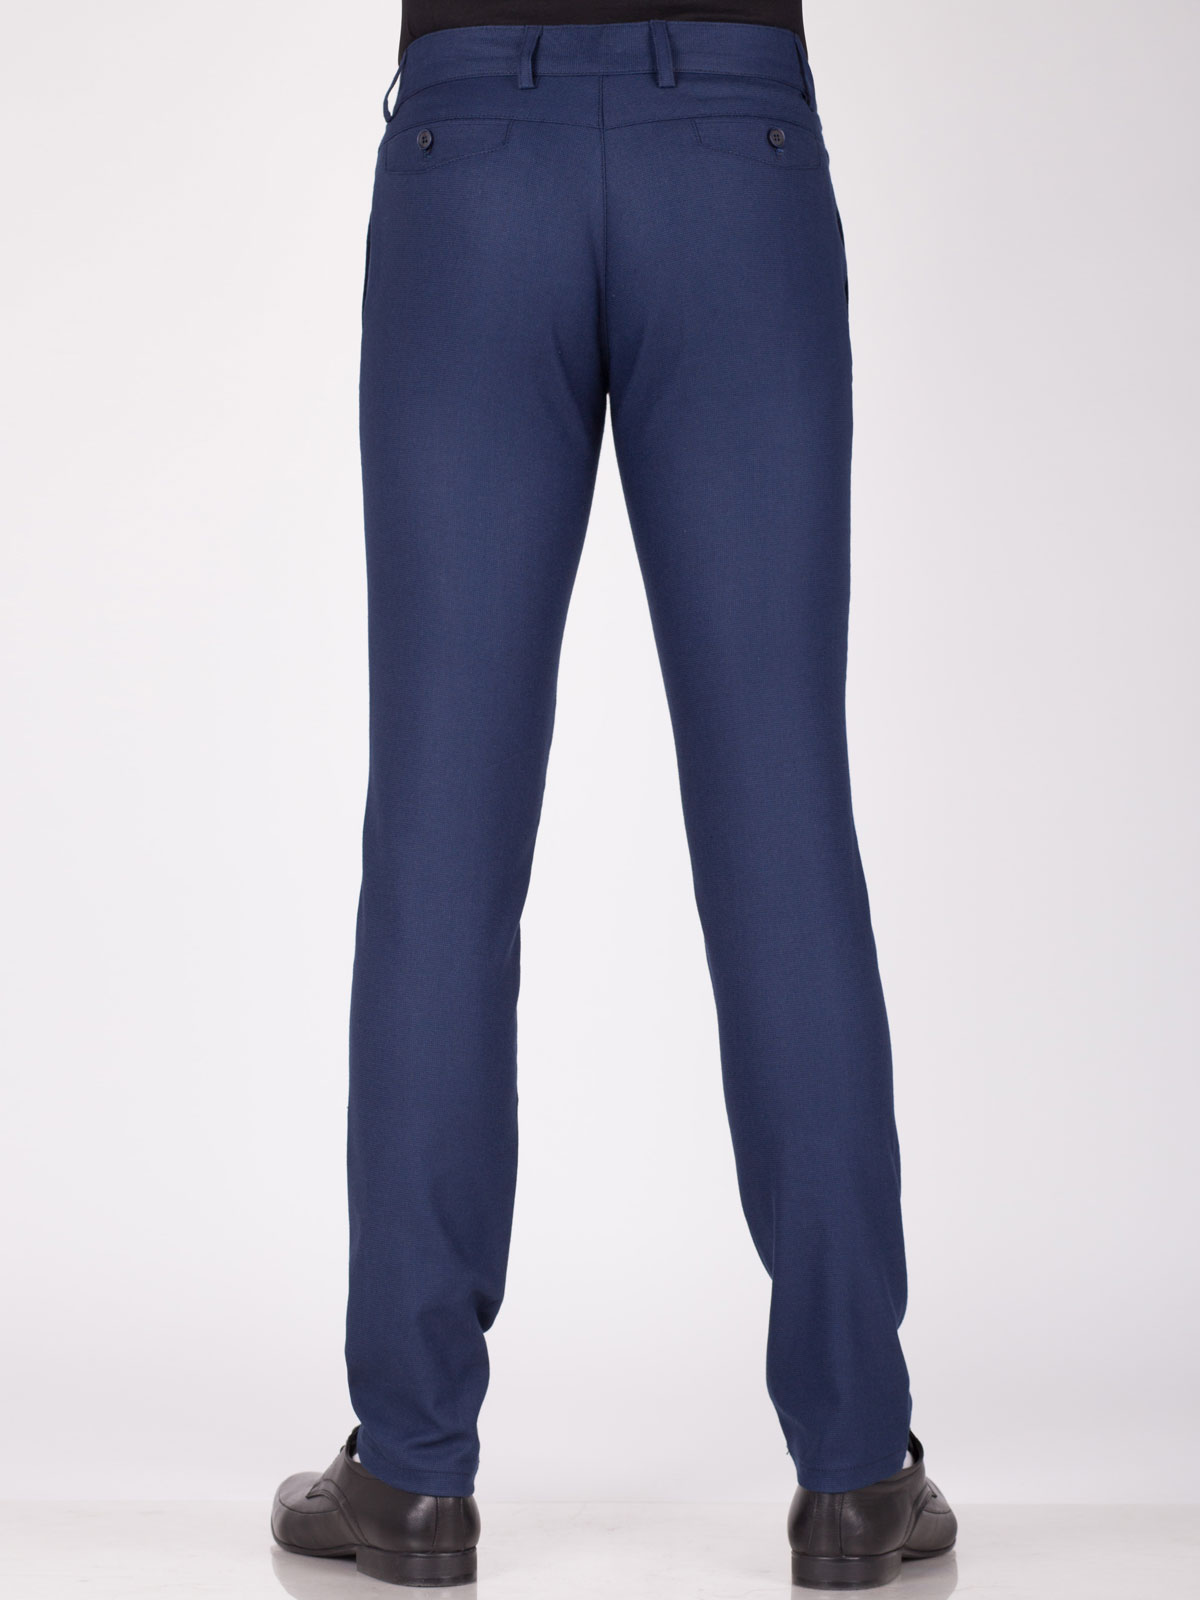 Pants in dark blue grain fabric - 60255 € 21.93 img2